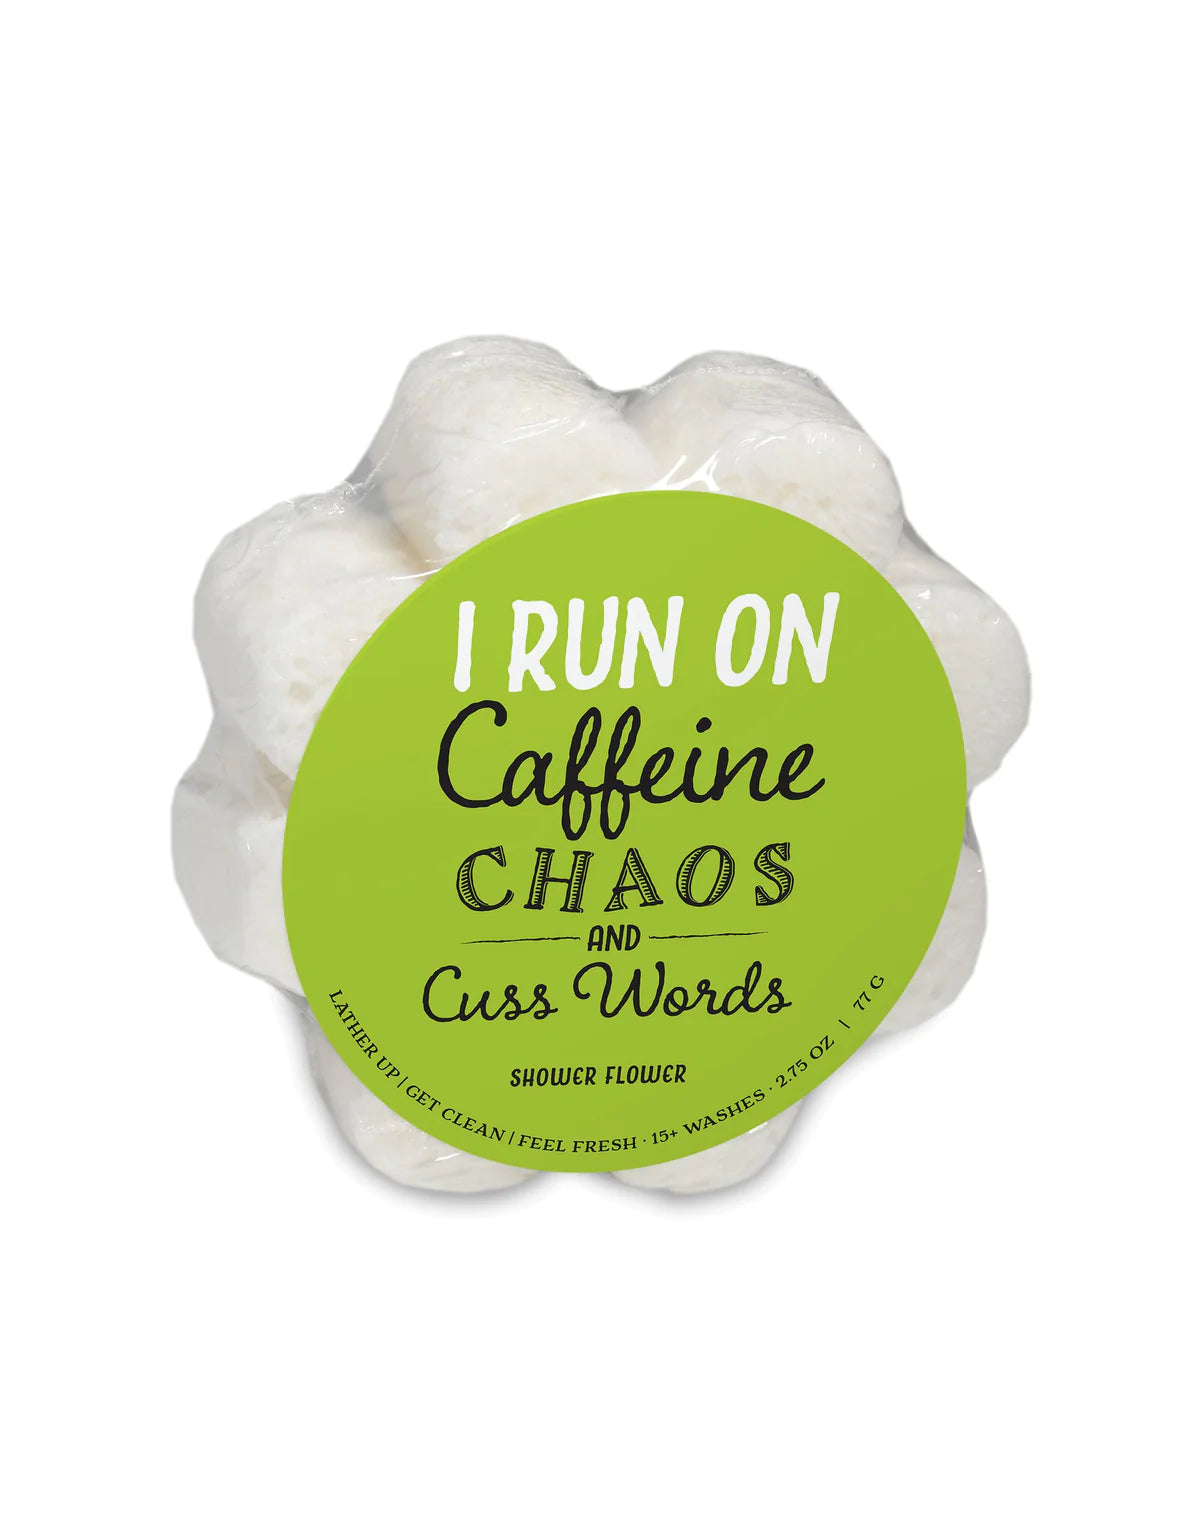 Caren "I Run On Caffeine, Chaos, And Cuss Words" soap sponge. Shaped like a white flower.